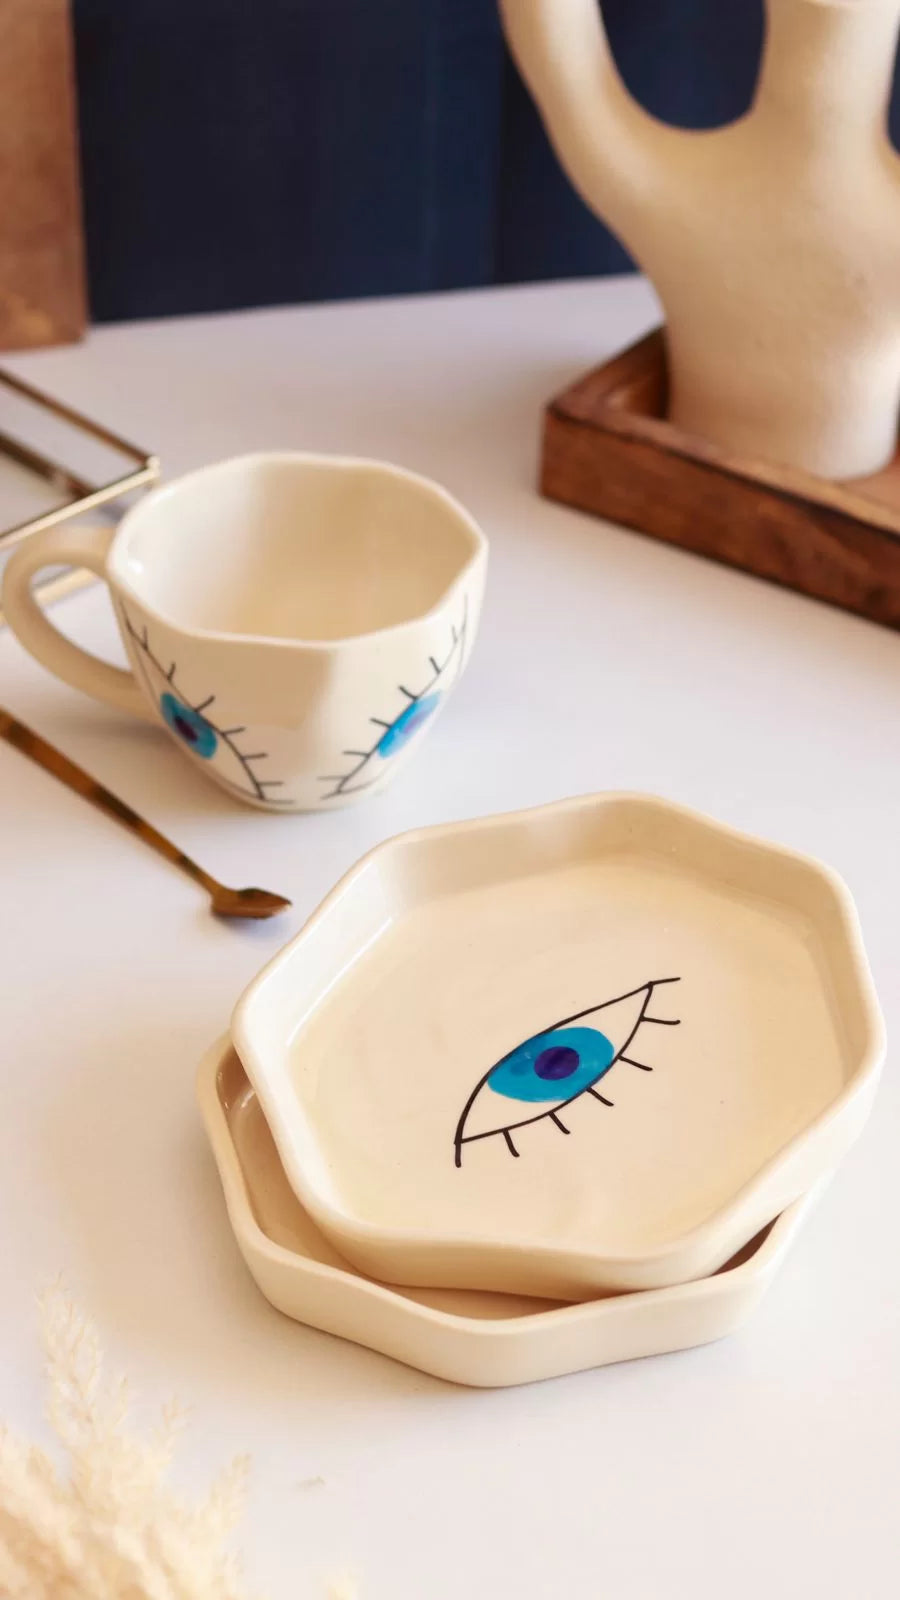 Buy CRAFTRIBAL Ceramic Hand Painted Evil Eye Trinket Tray